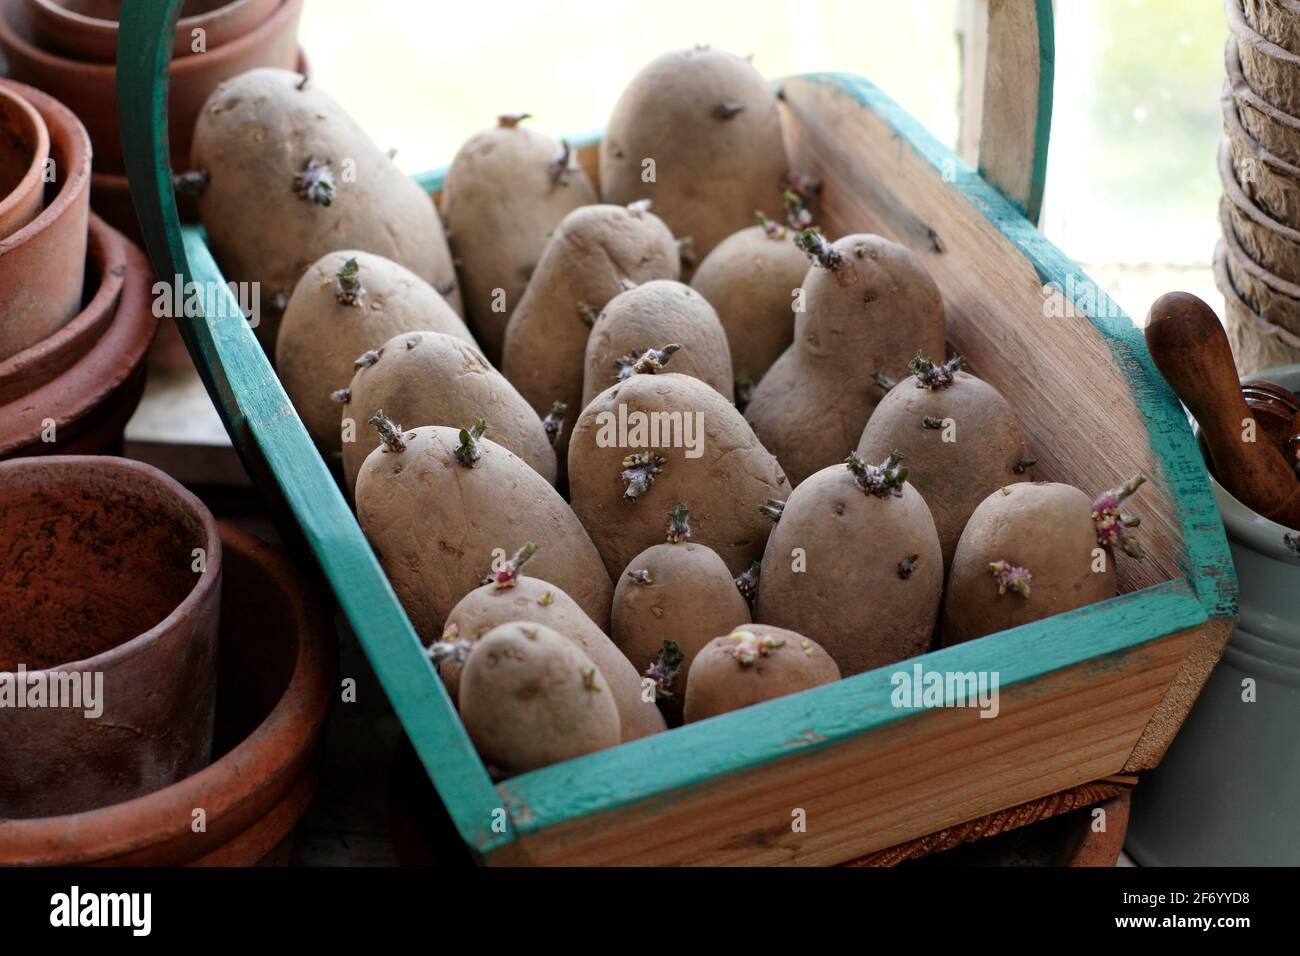 Seed potatoes chitting on a warm windowsill in spring. Solanum tuberosum 'Ratte' potatoesUK. Stock Photo